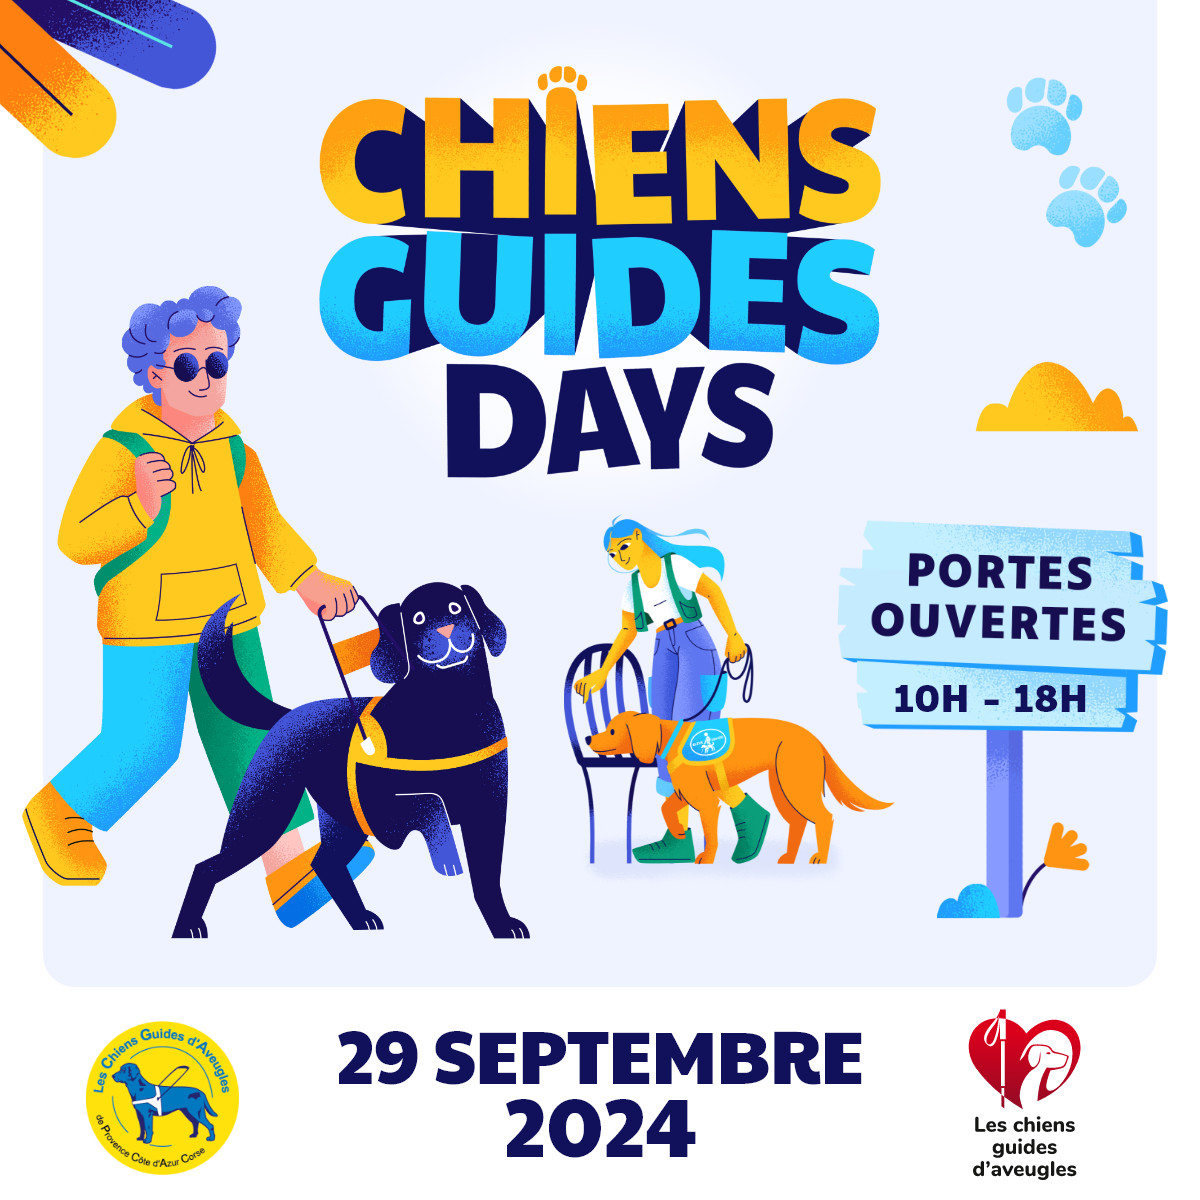 Les Chiens Guides Days